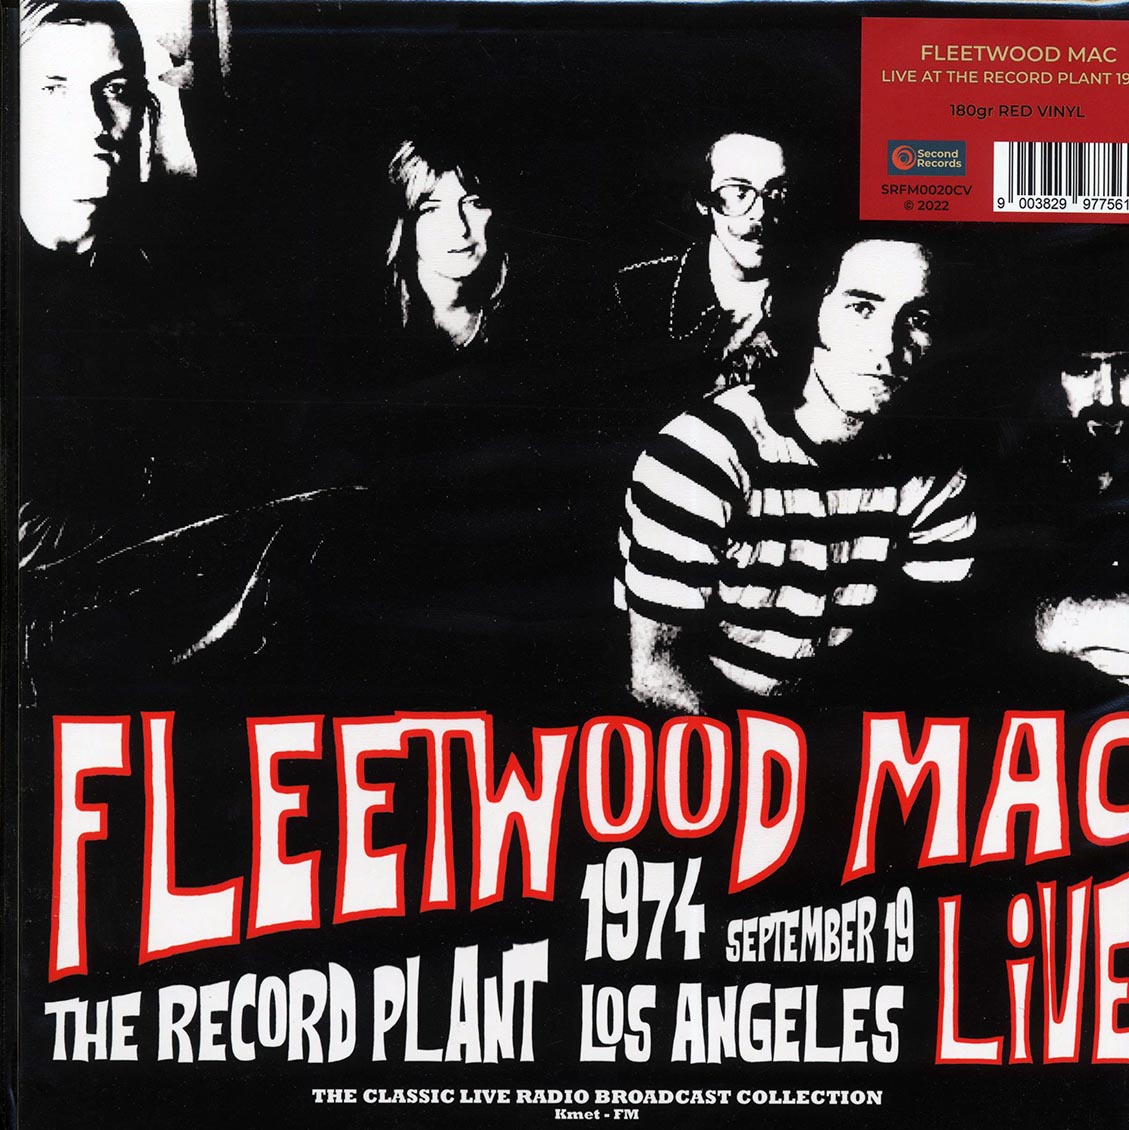 Fleetwood Mac - Live At The Record Plant Los Angeles 1974 September 19 (180g) (red vinyl) - Vinyl LP